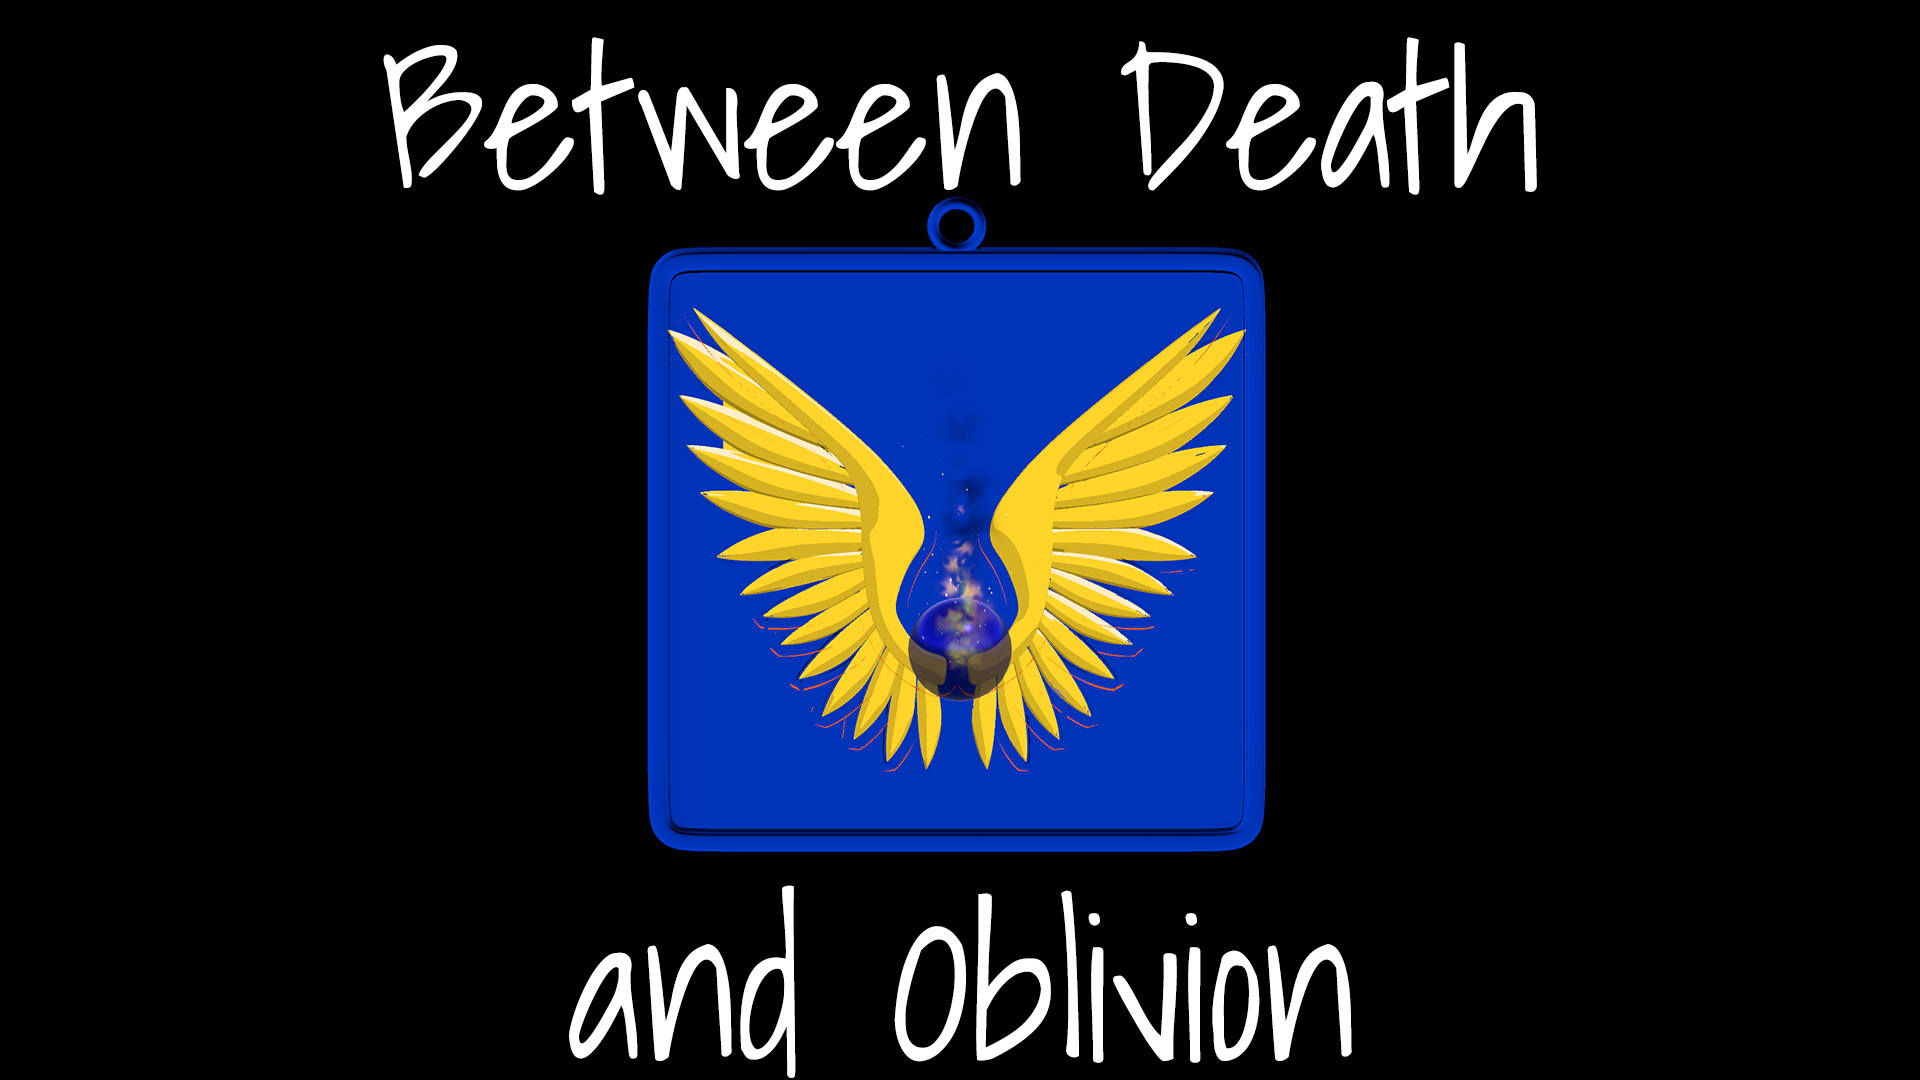 Between Death  and  Oblivion